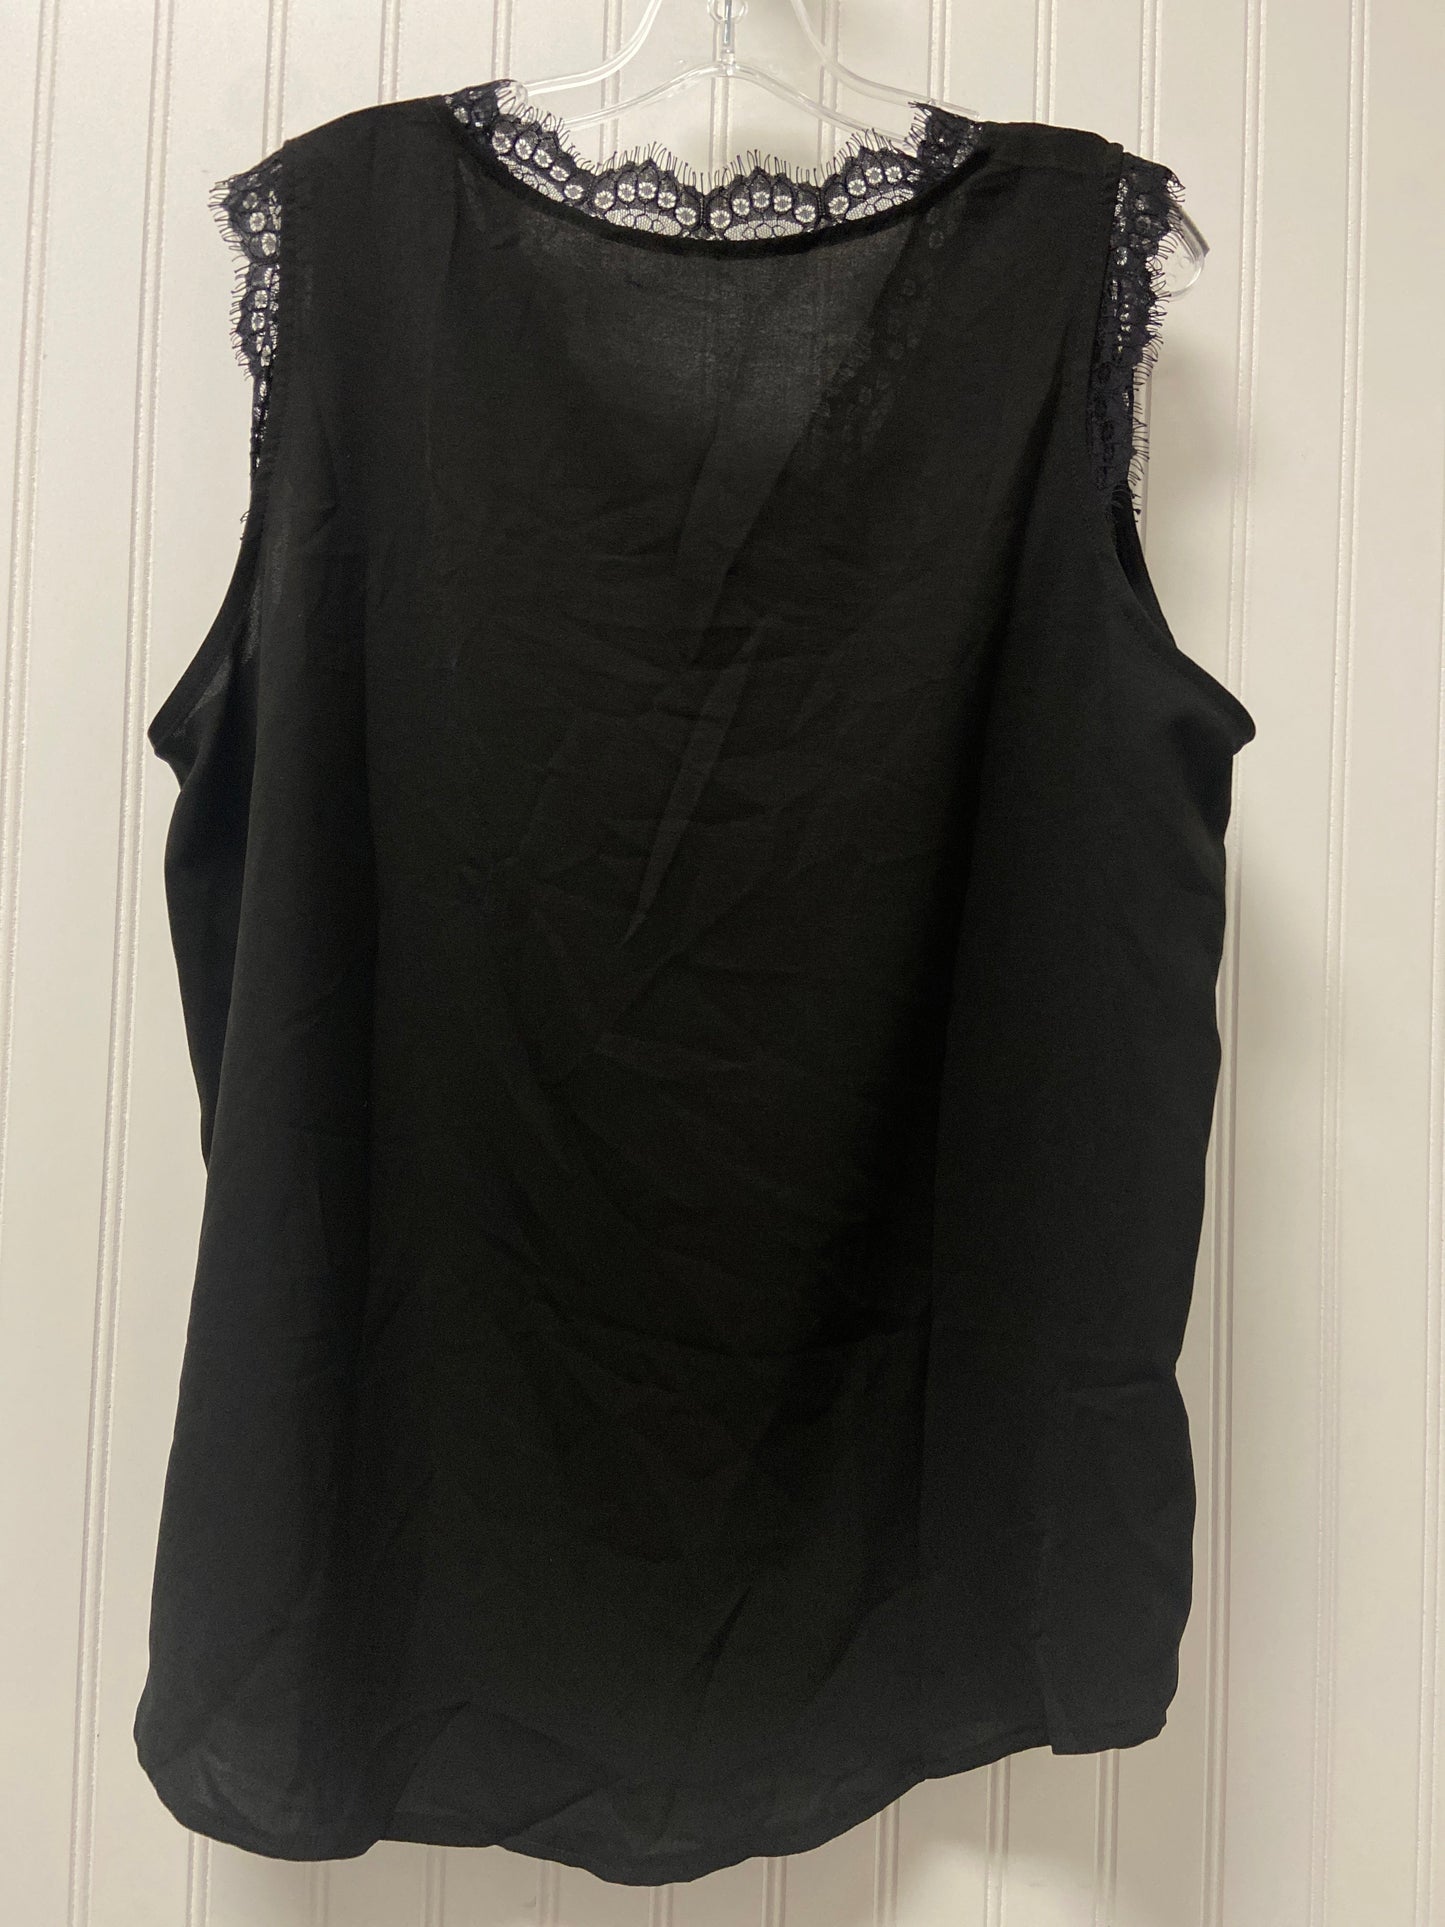 Black Top Sleeveless Basic Clothes Mentor, Size 1x